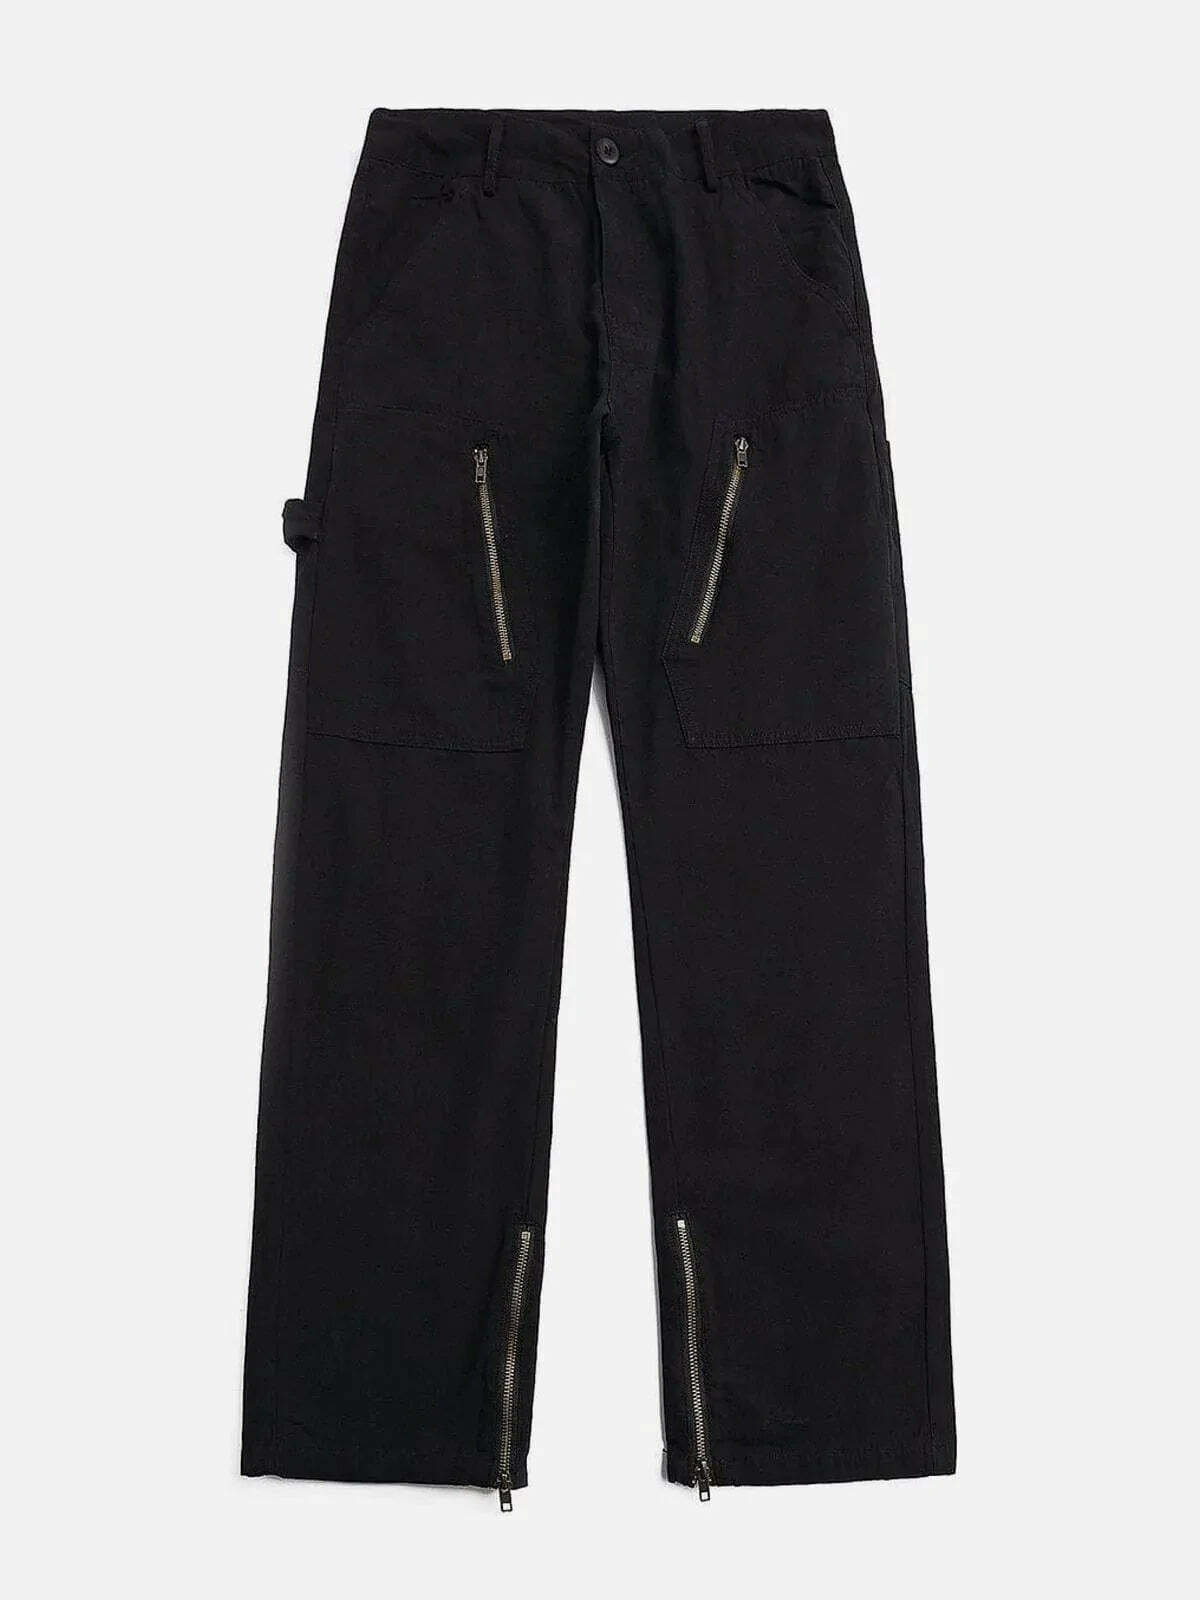 retro zipup jeans edgy & stylish streetwear 4689